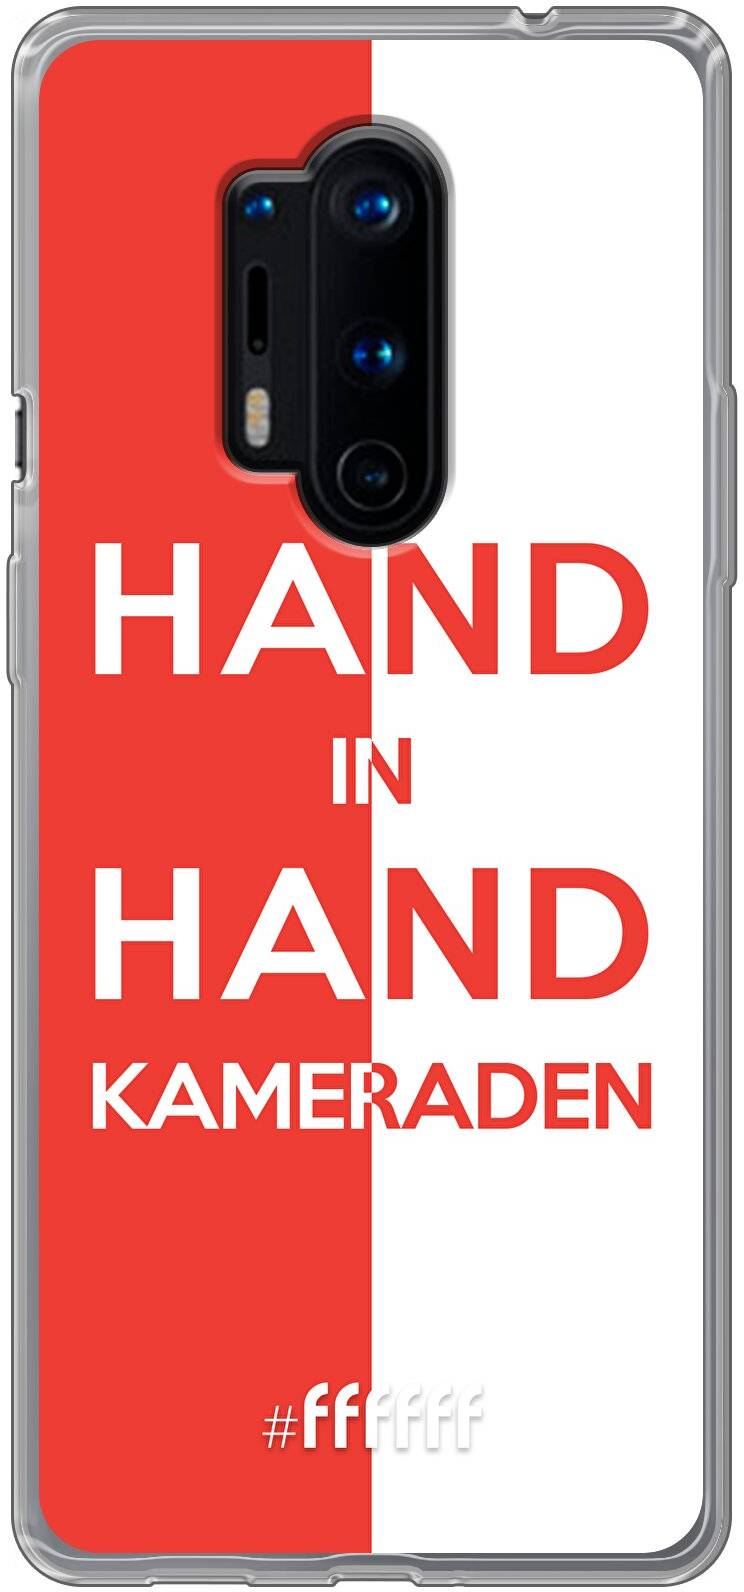 Feyenoord - Hand in hand, kameraden 8 Pro